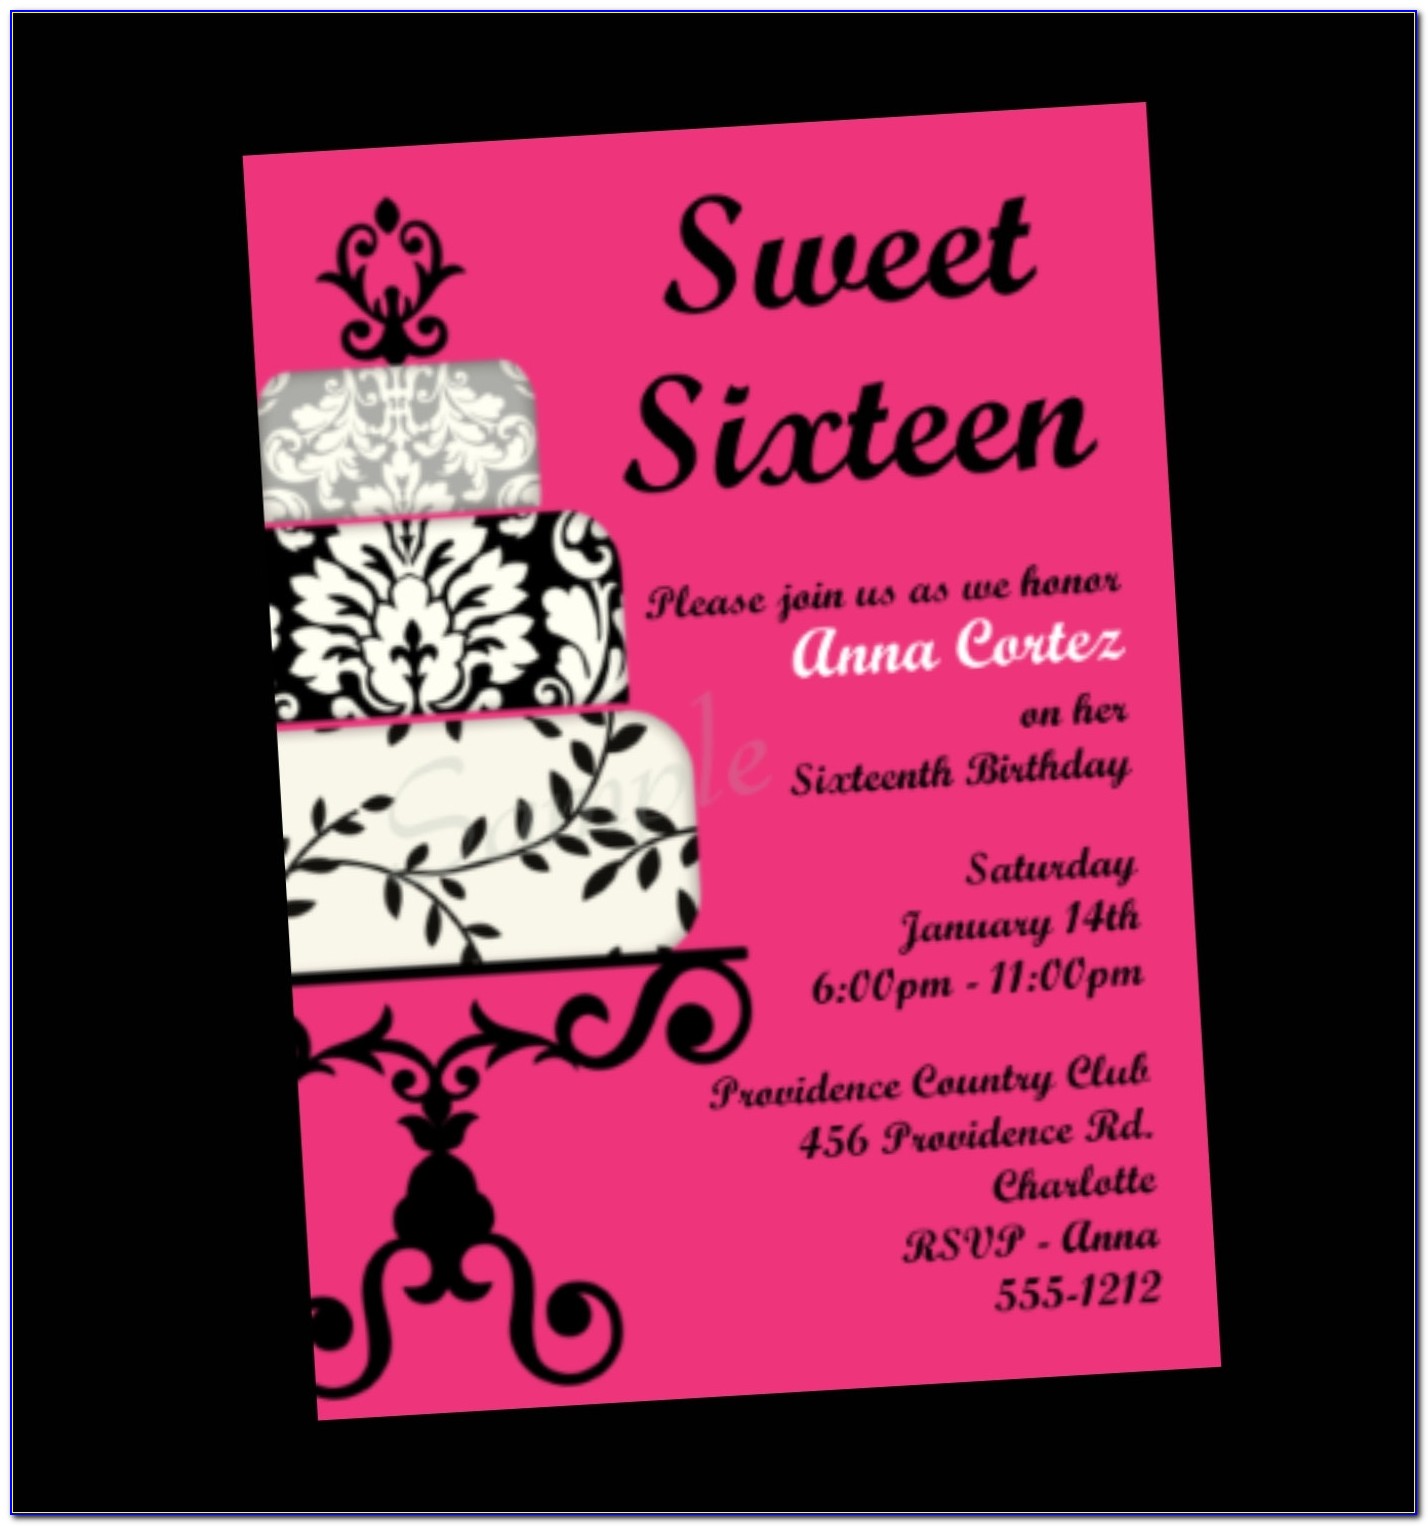 Sweet Sixteen Birthday Invitation Card